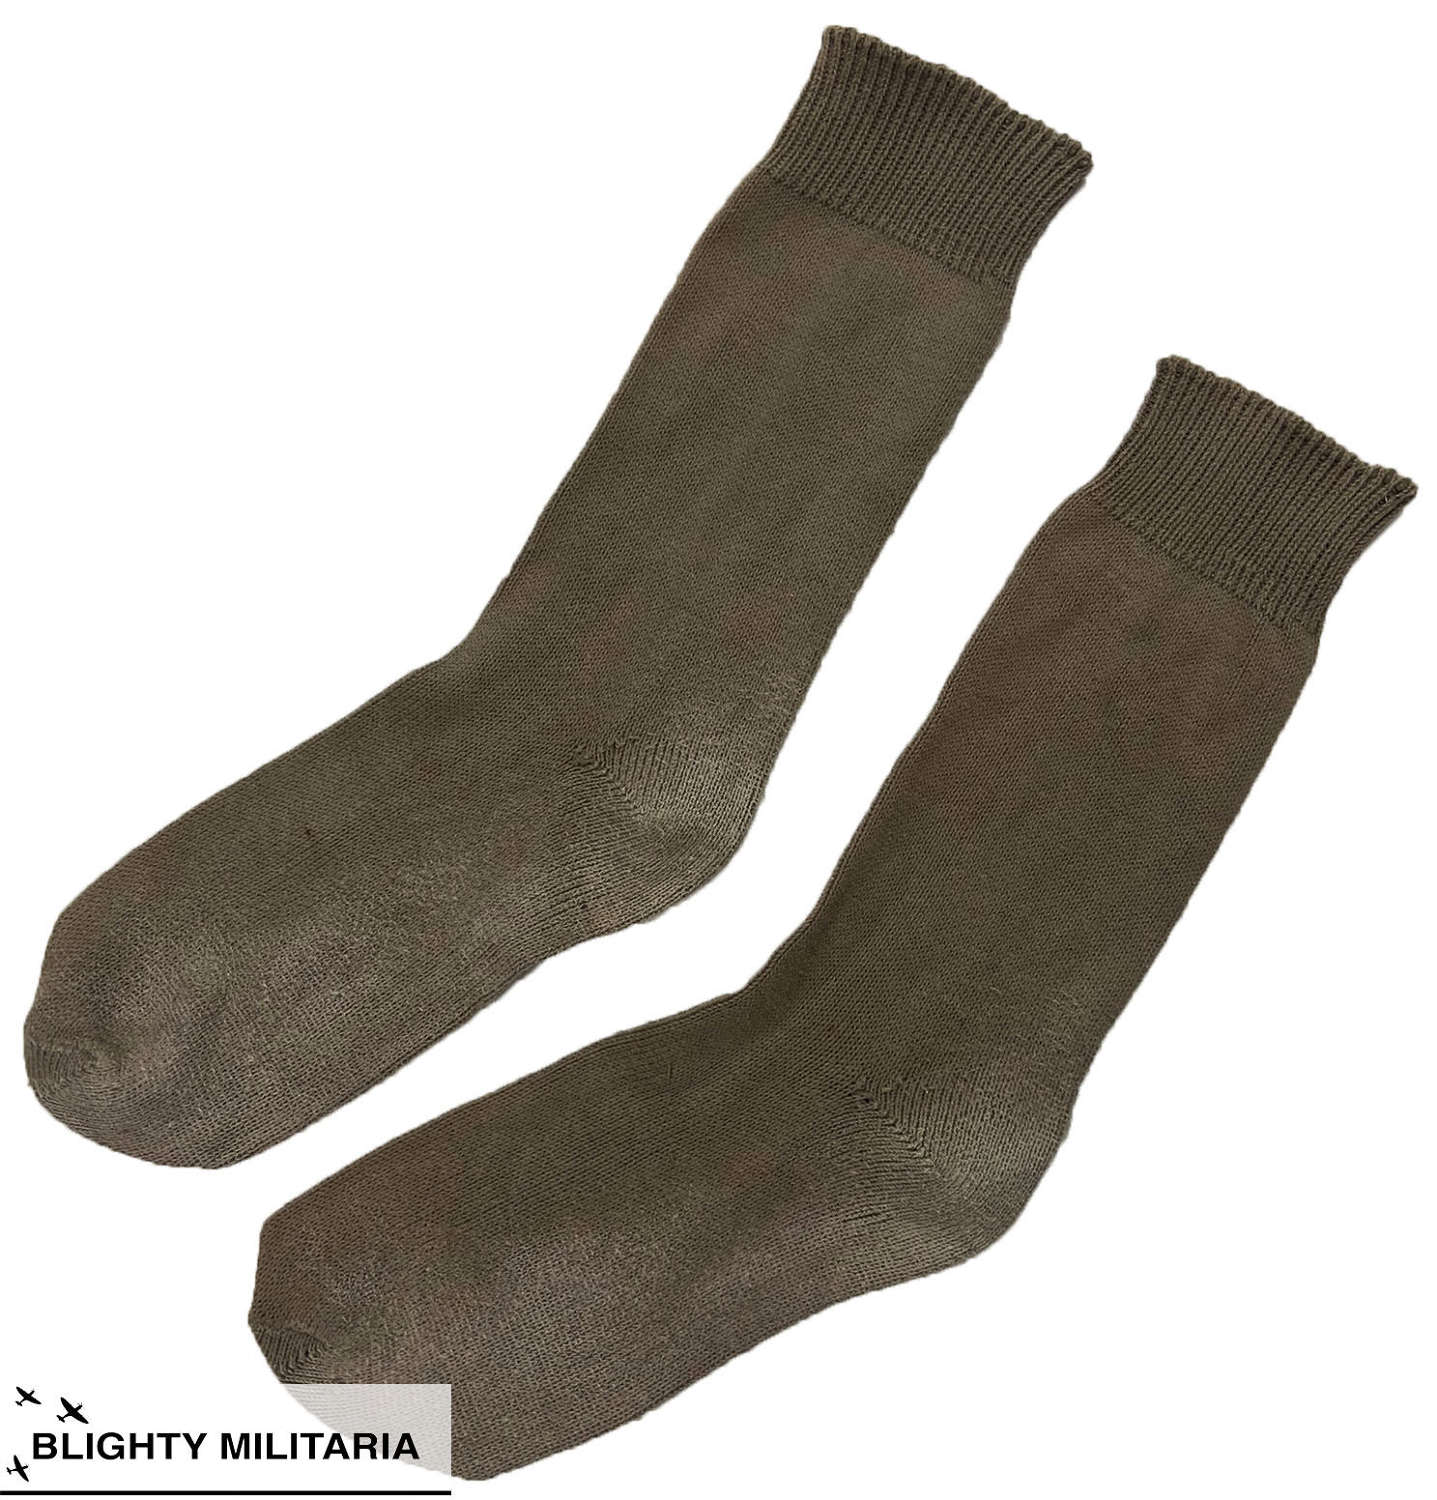 Original 1940s RAF Airman's Socks